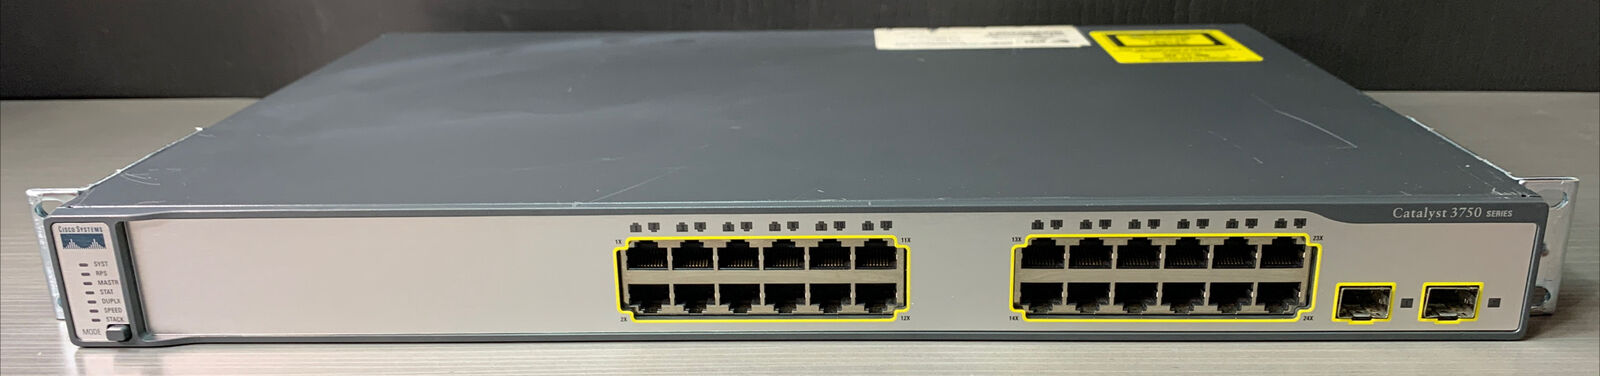 Cisco Catalyst 3750 WS-C3750-24TS-S V06 24-Port Managed 10/100 Switch